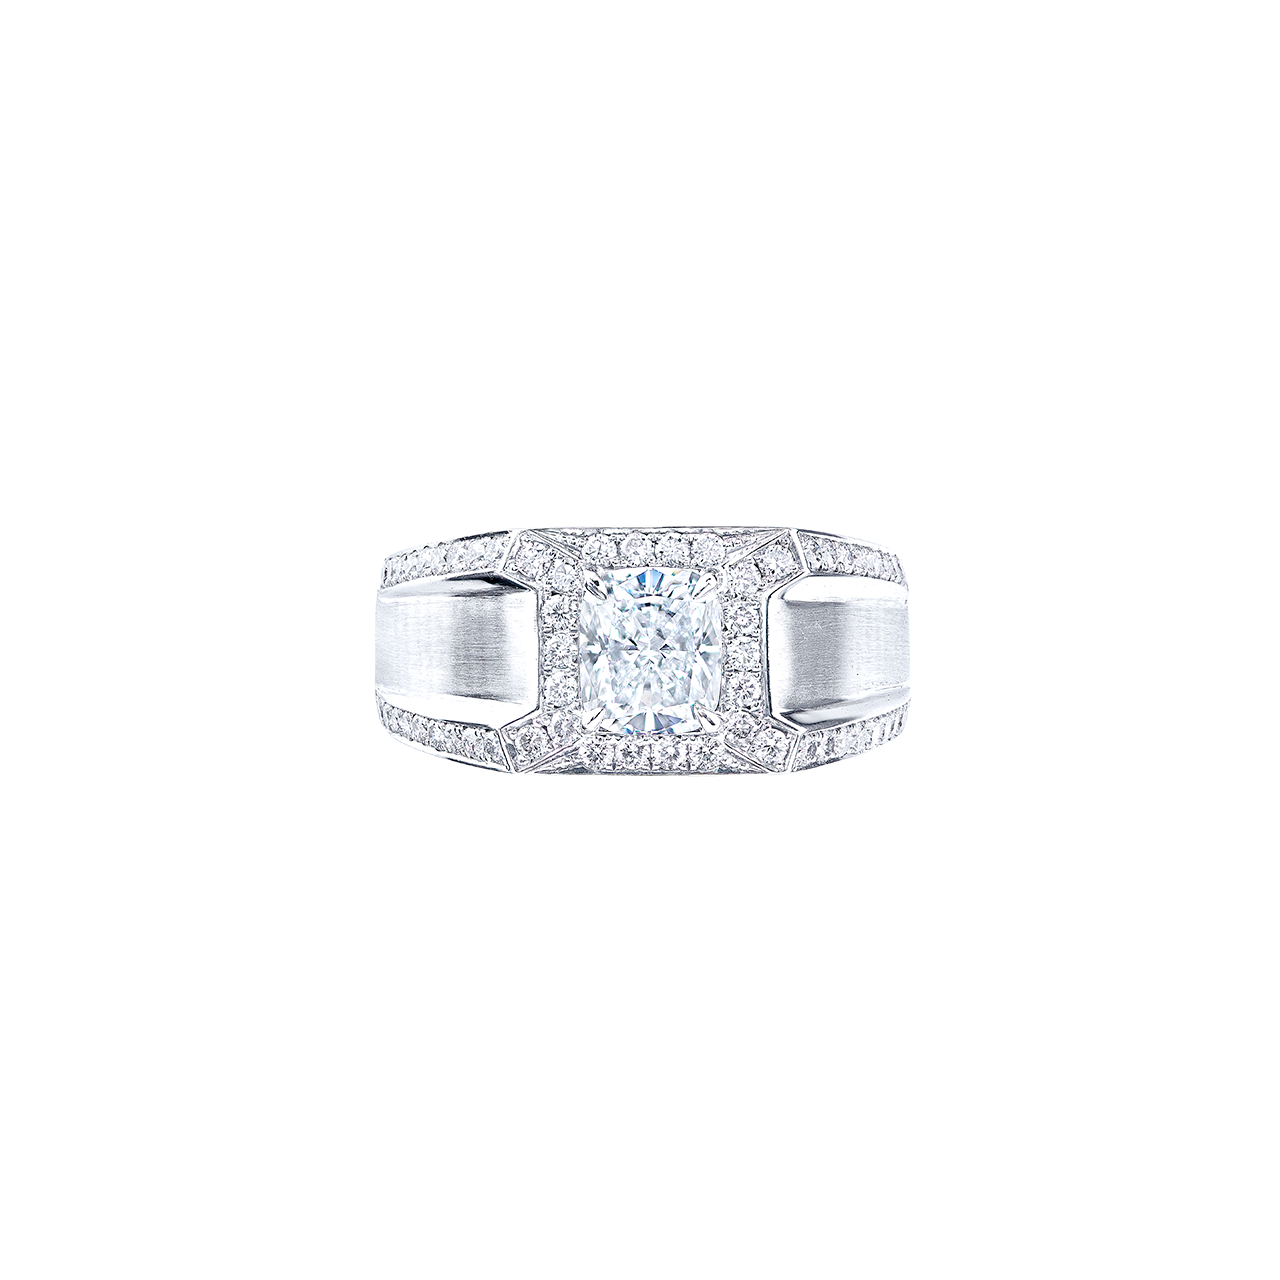 GIA 1.08克拉 DIF白鑽男戒
D Color, Internally Flawless Diamond Ring